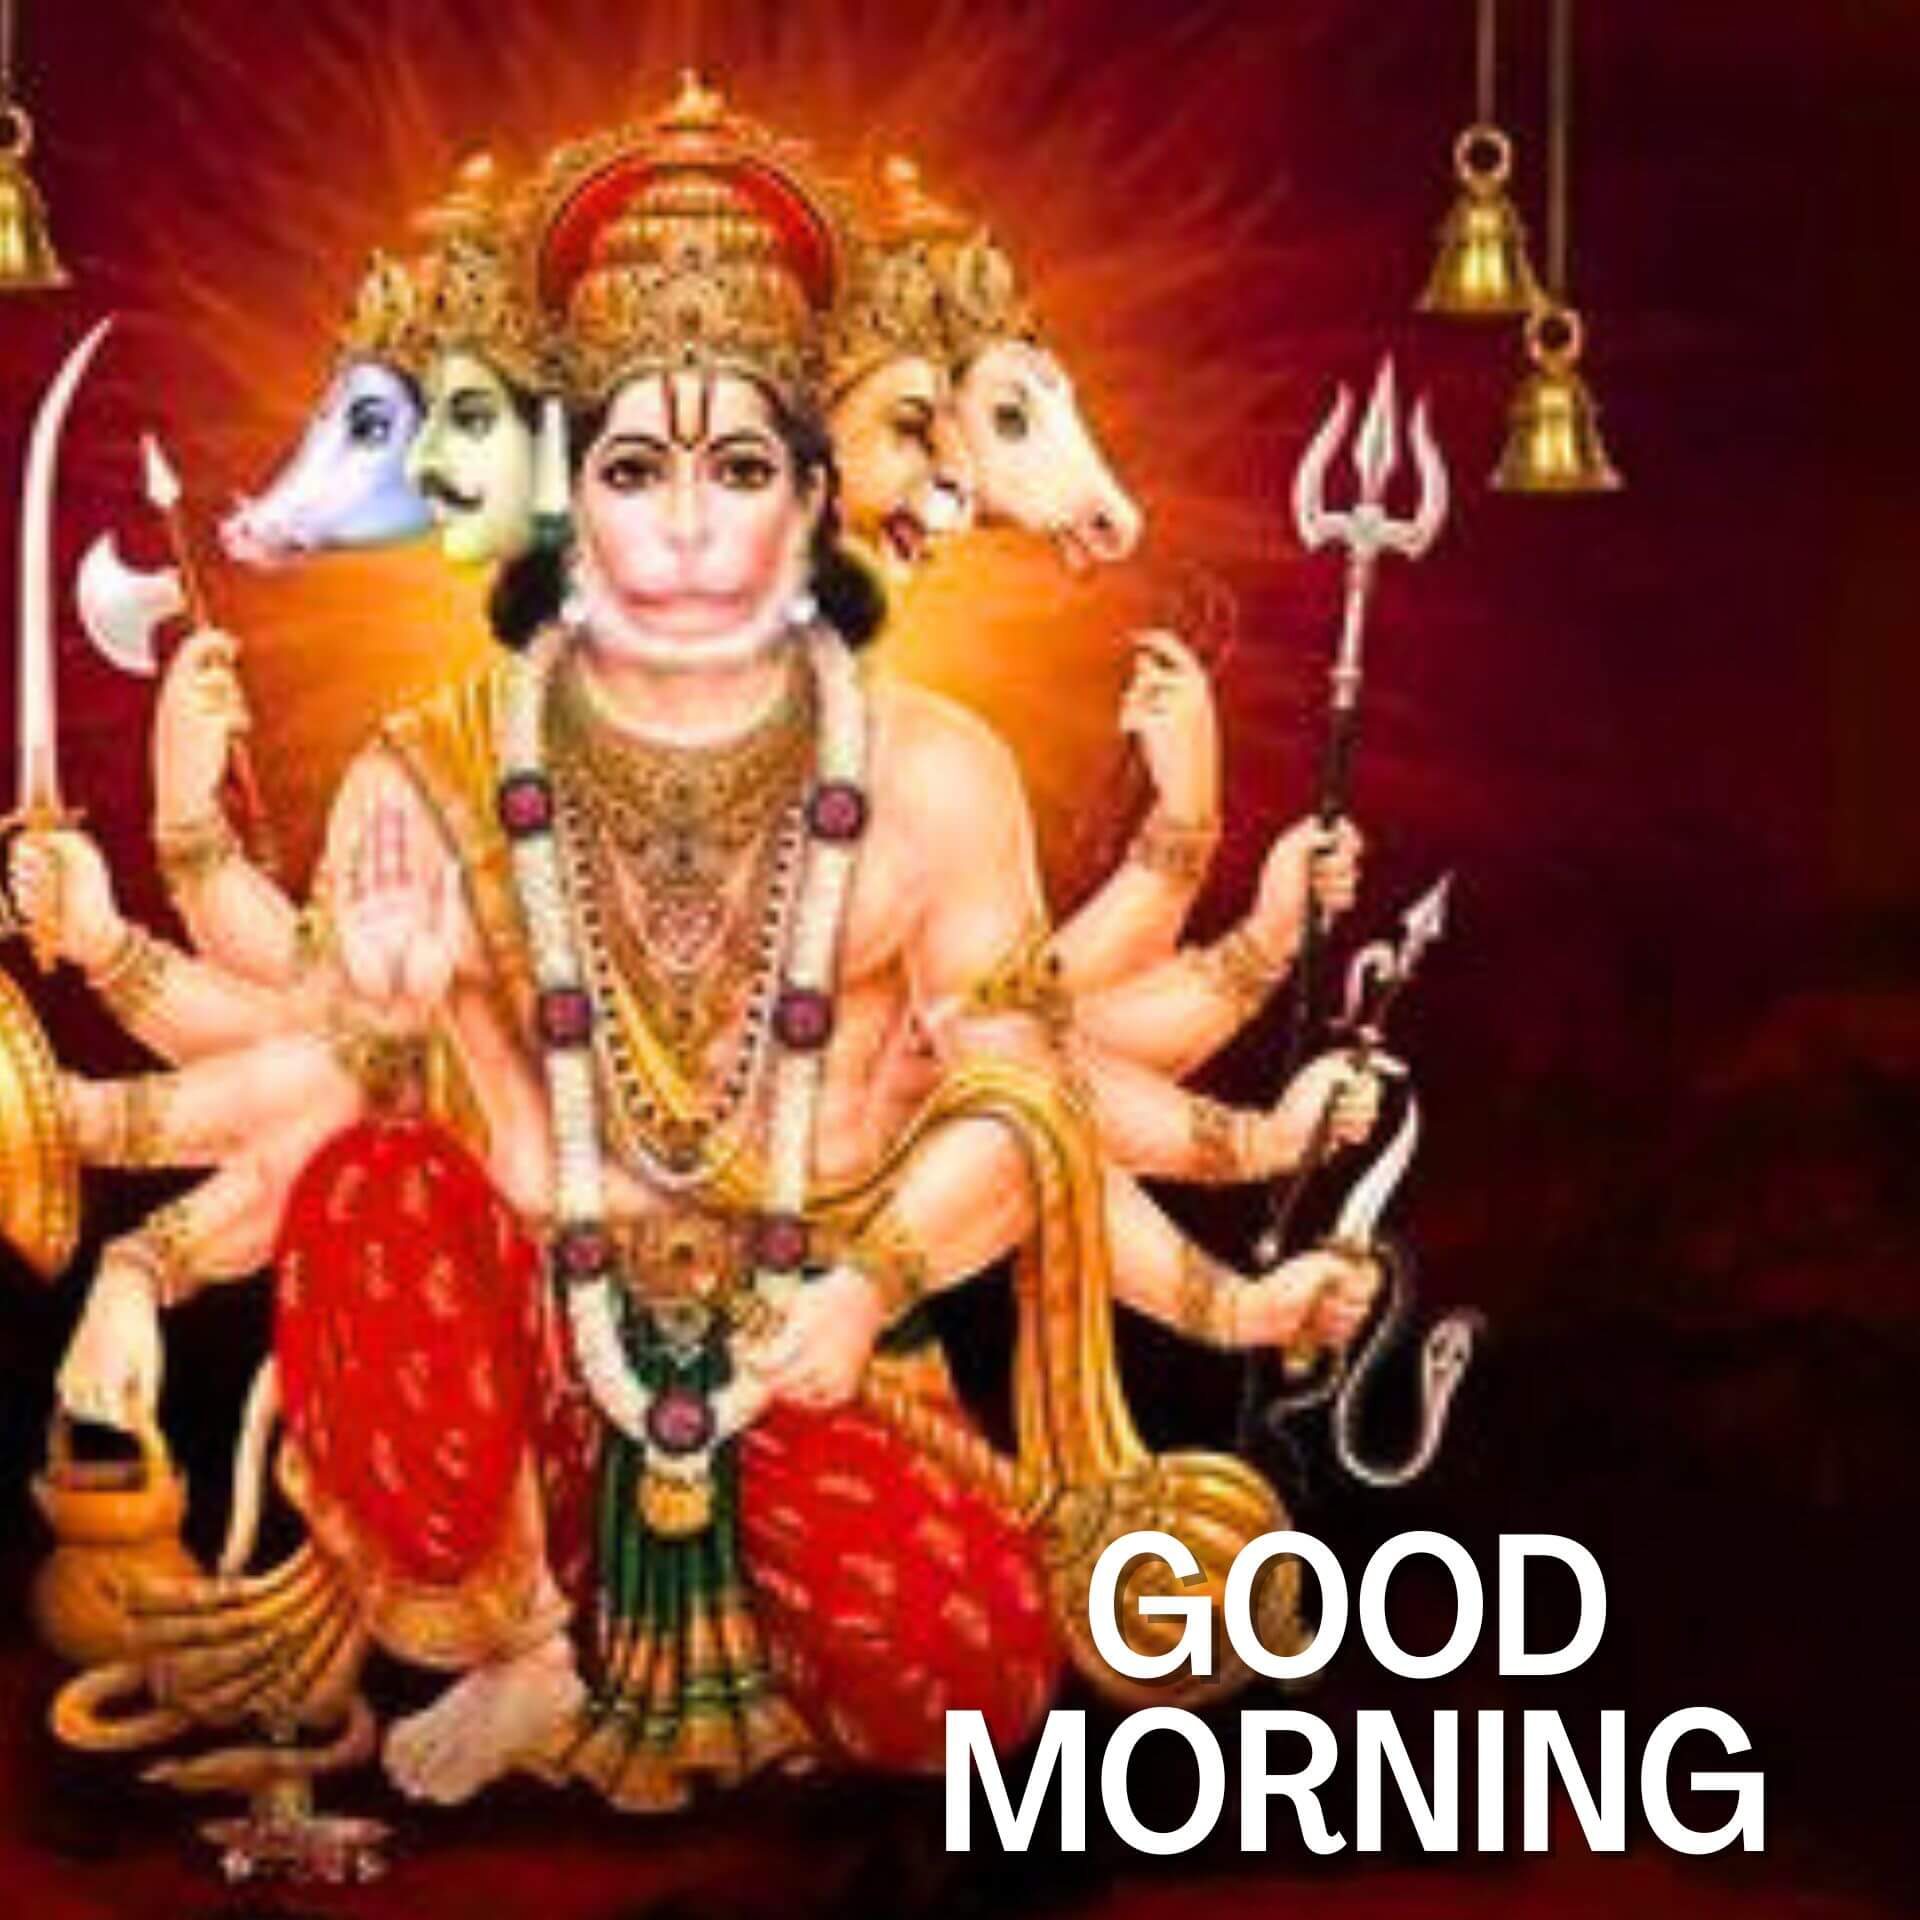 hanuman ji good morning Wallpaper free for Whatsapp